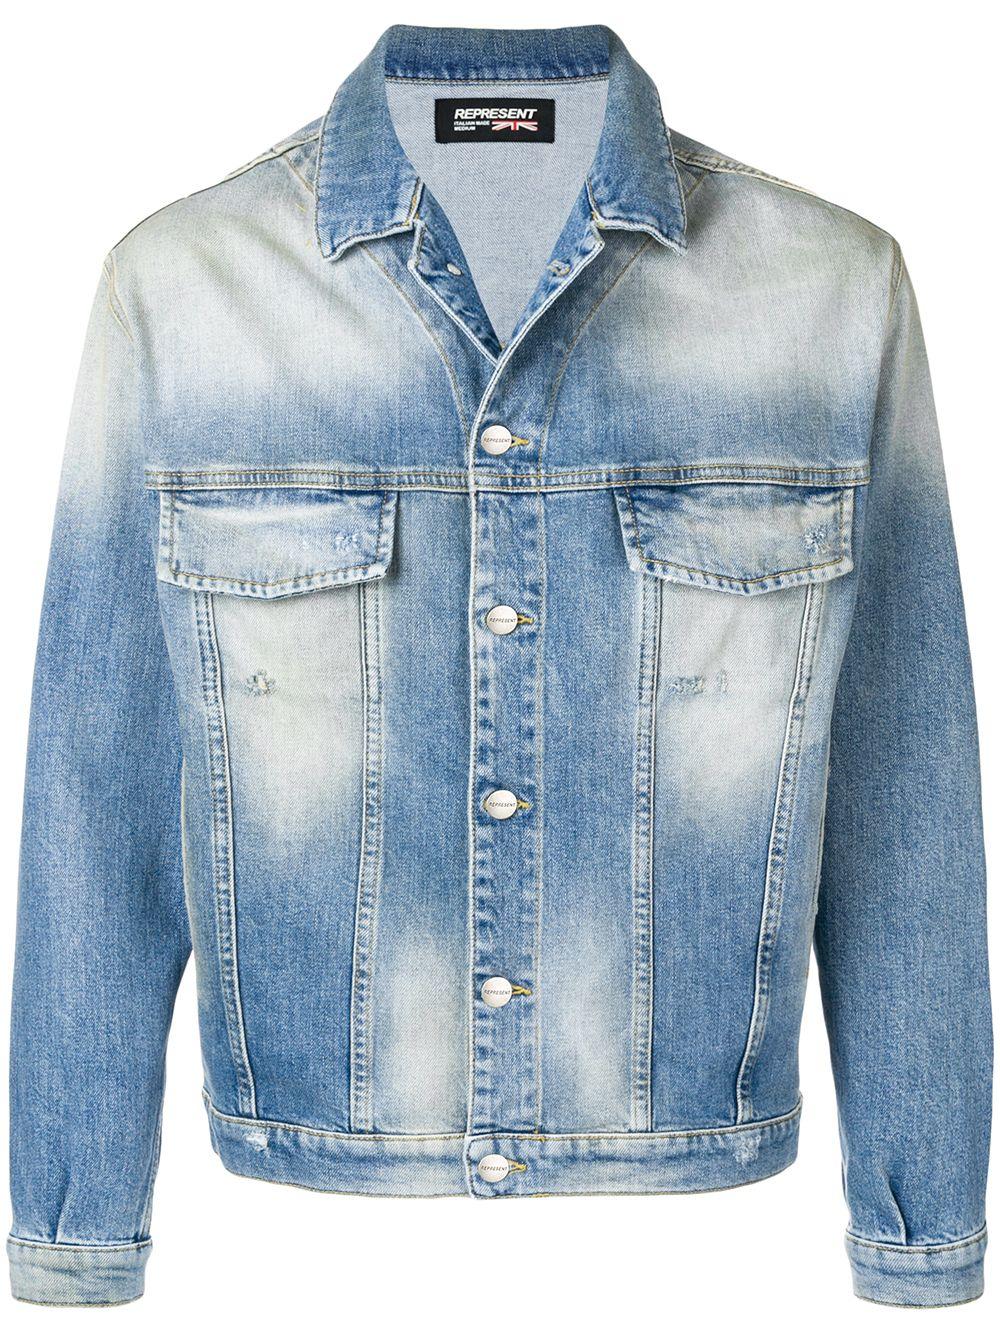 Represent Washed Denim Jacket in Blue for Men - Lyst